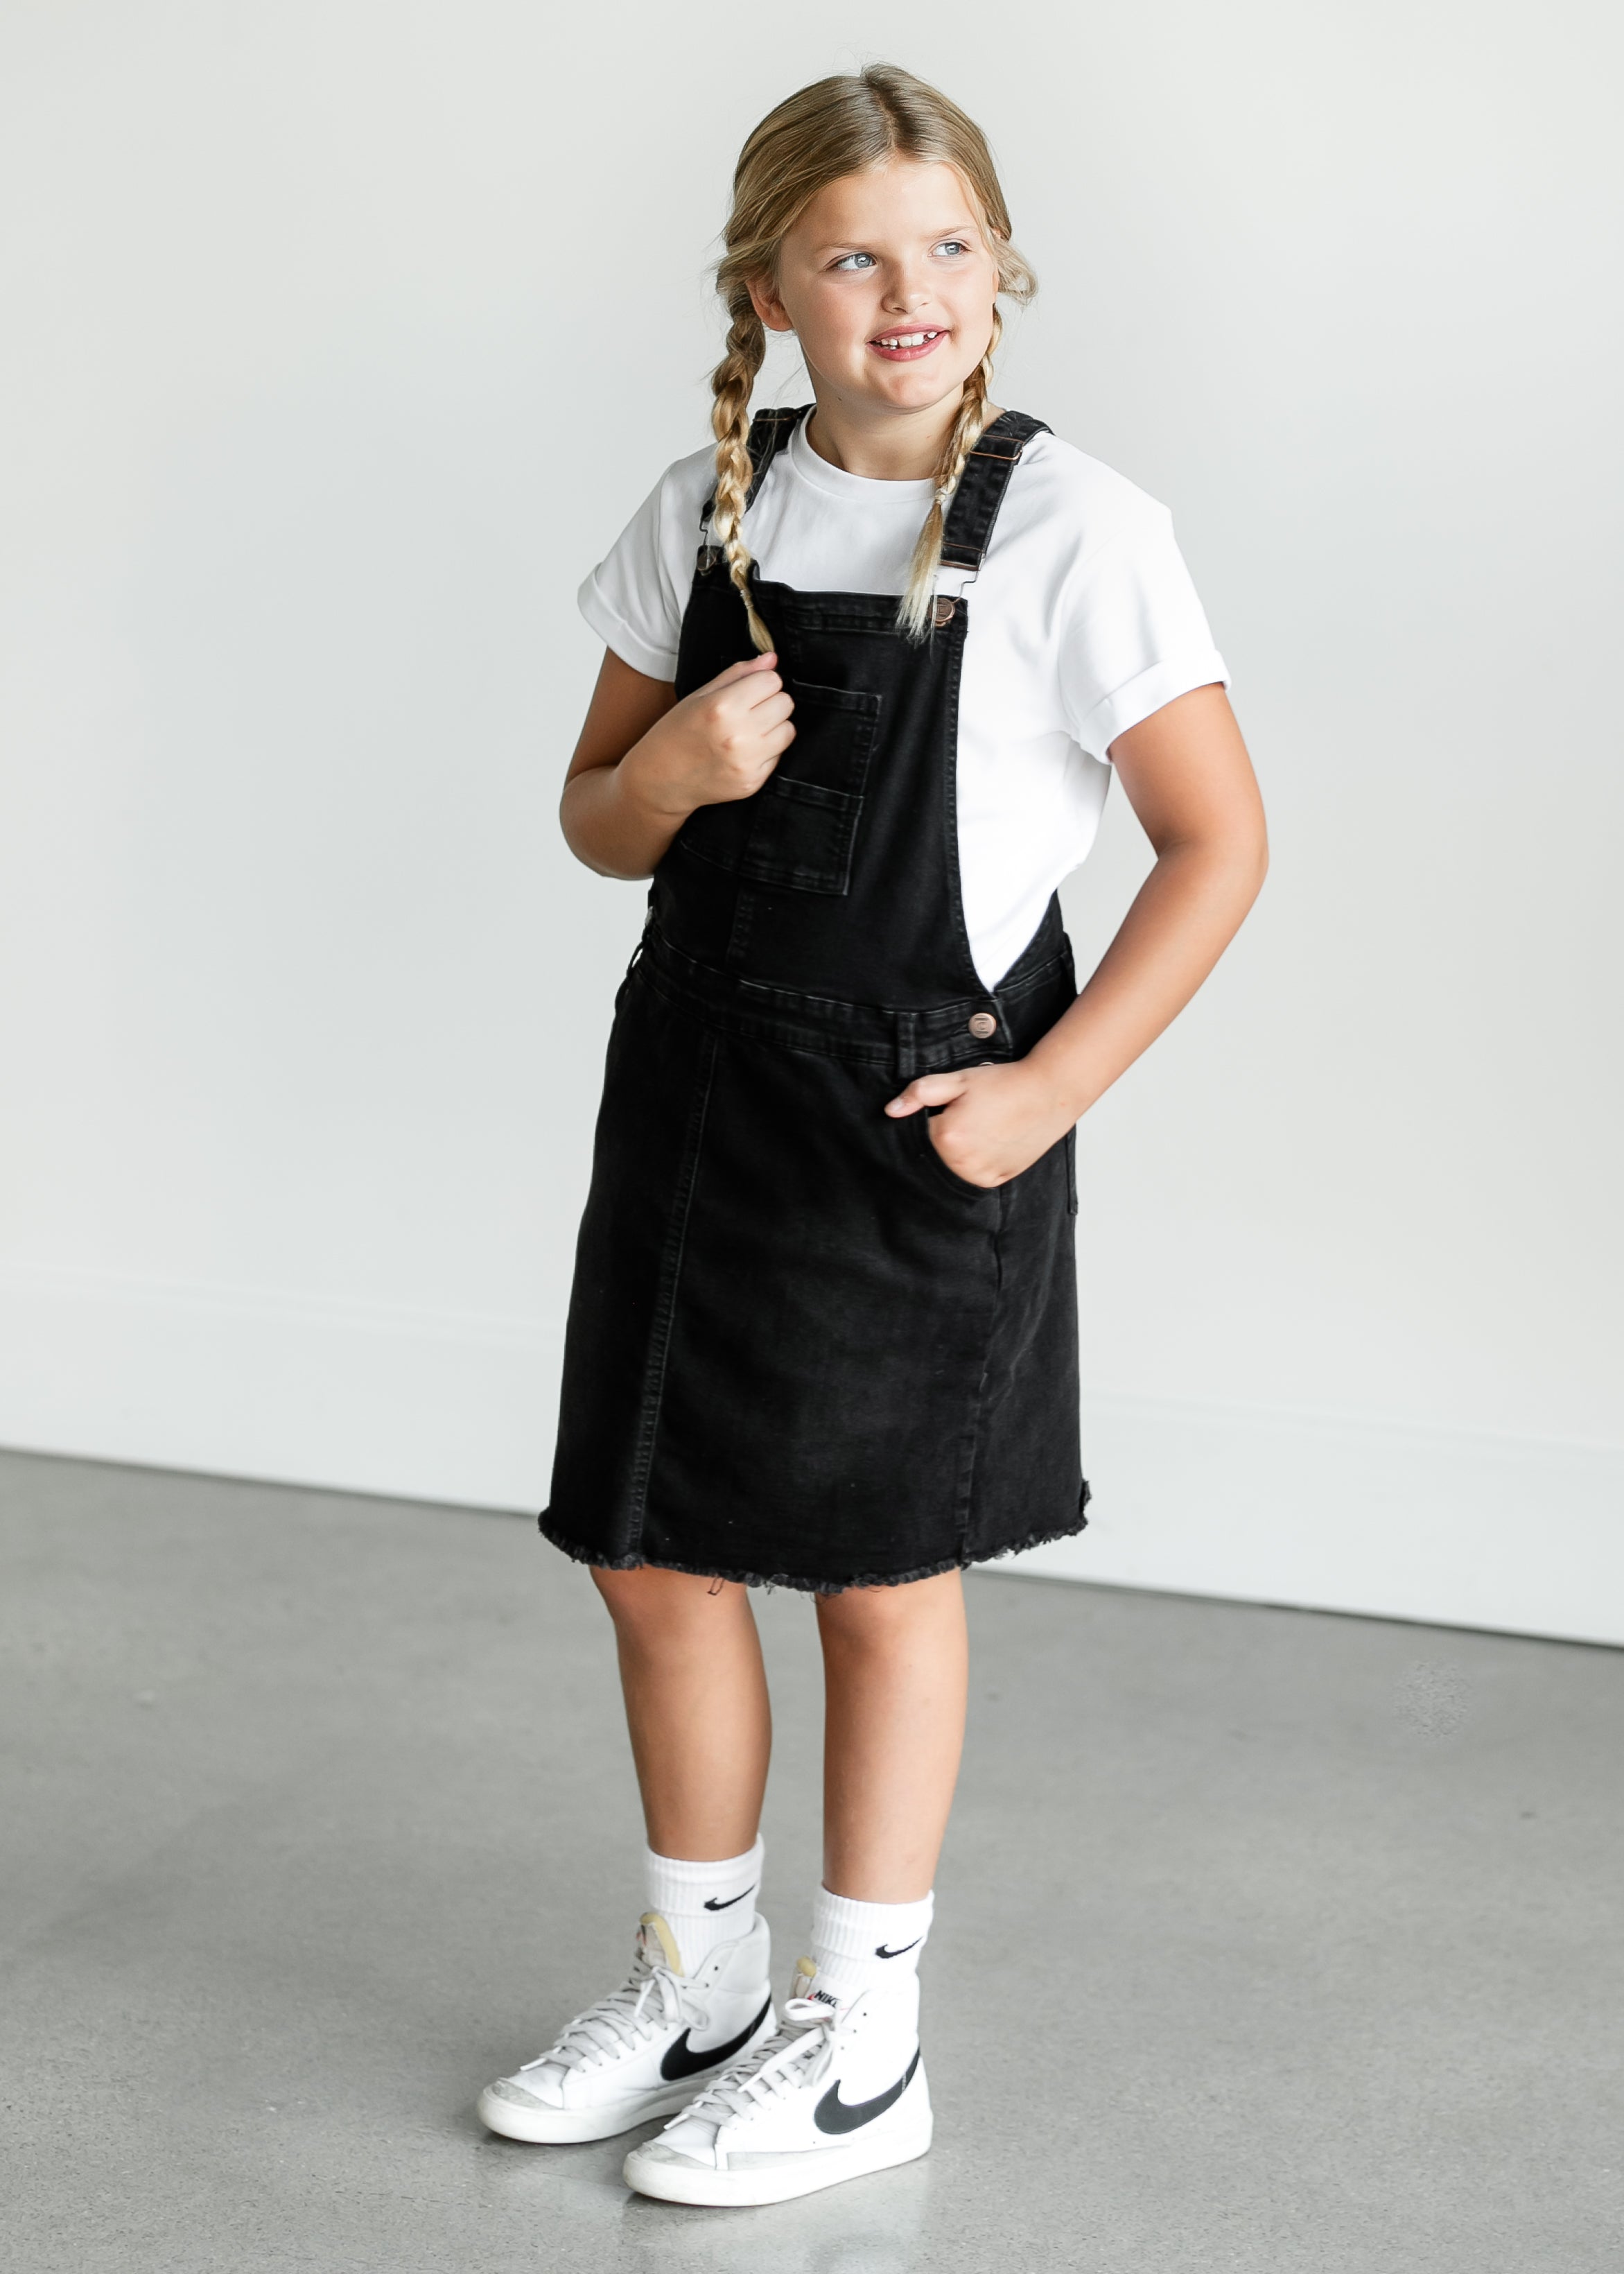 Buy Digirlsor Little Big Kids Girls Overall Dress Denim Skirt Cotton Bib  Overalls Casual Romper Jumpsuit,3-12 Years Light Blue at Amazon.in